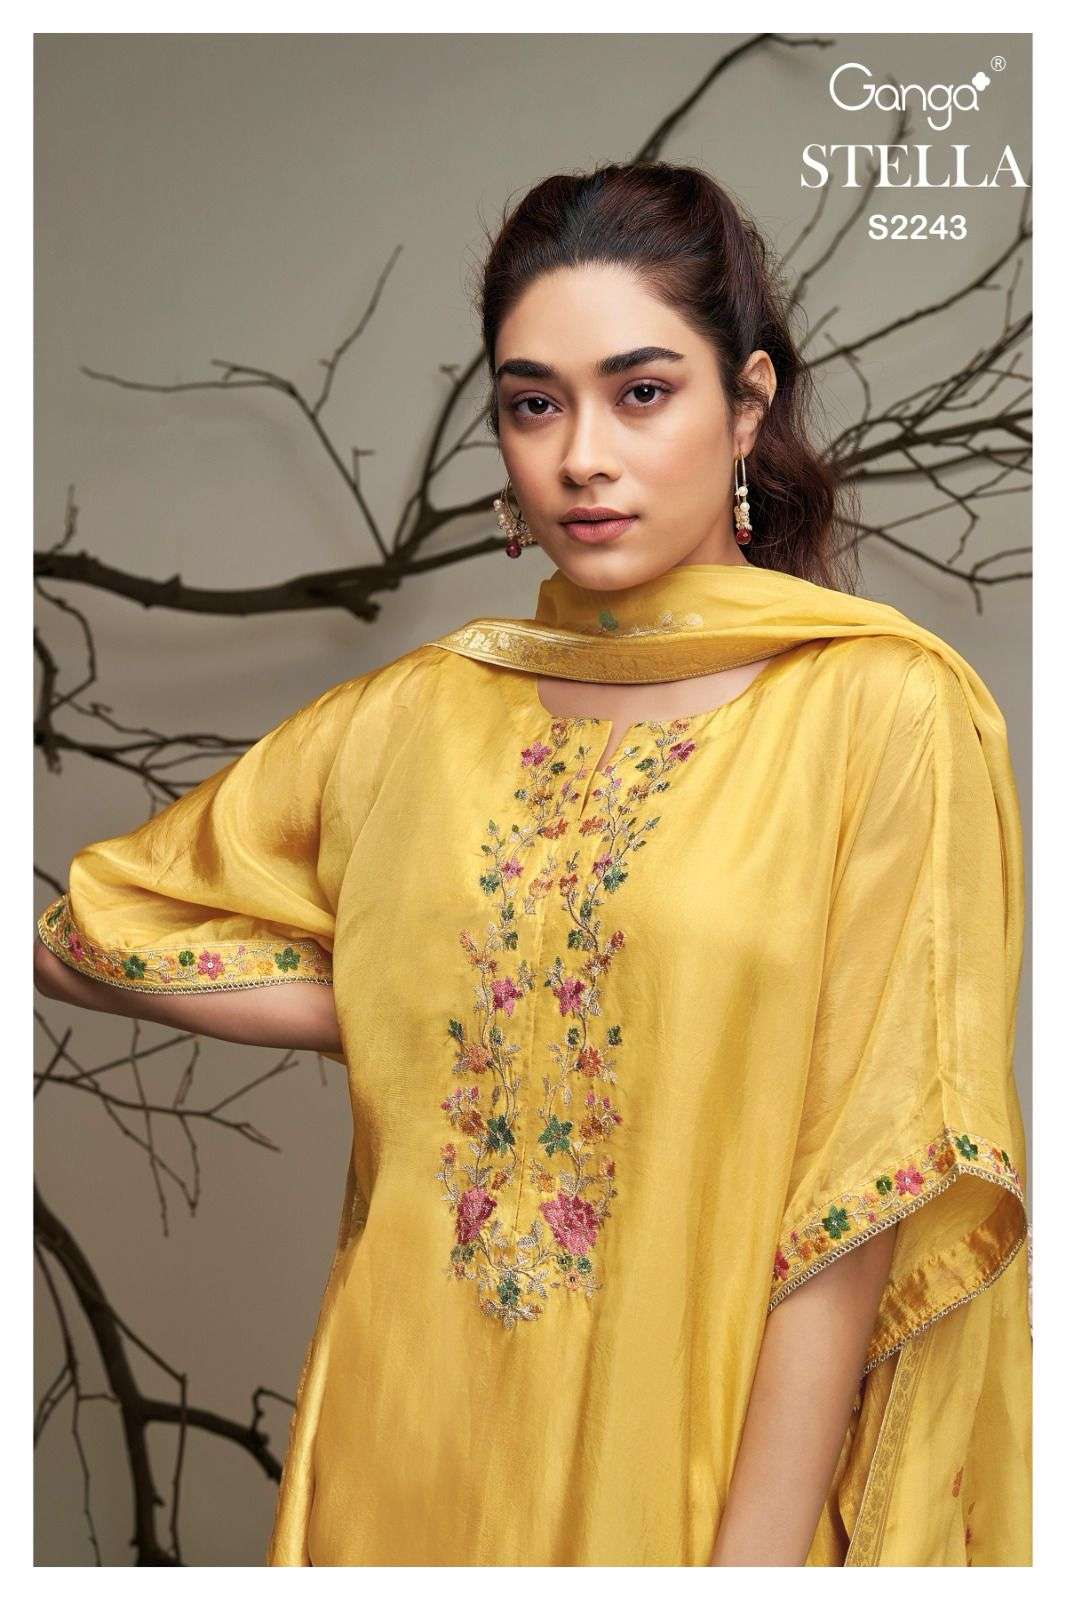 Ganga Stella 2243 New Designs Silk Festival Style Branded Ladies Suit Exporters